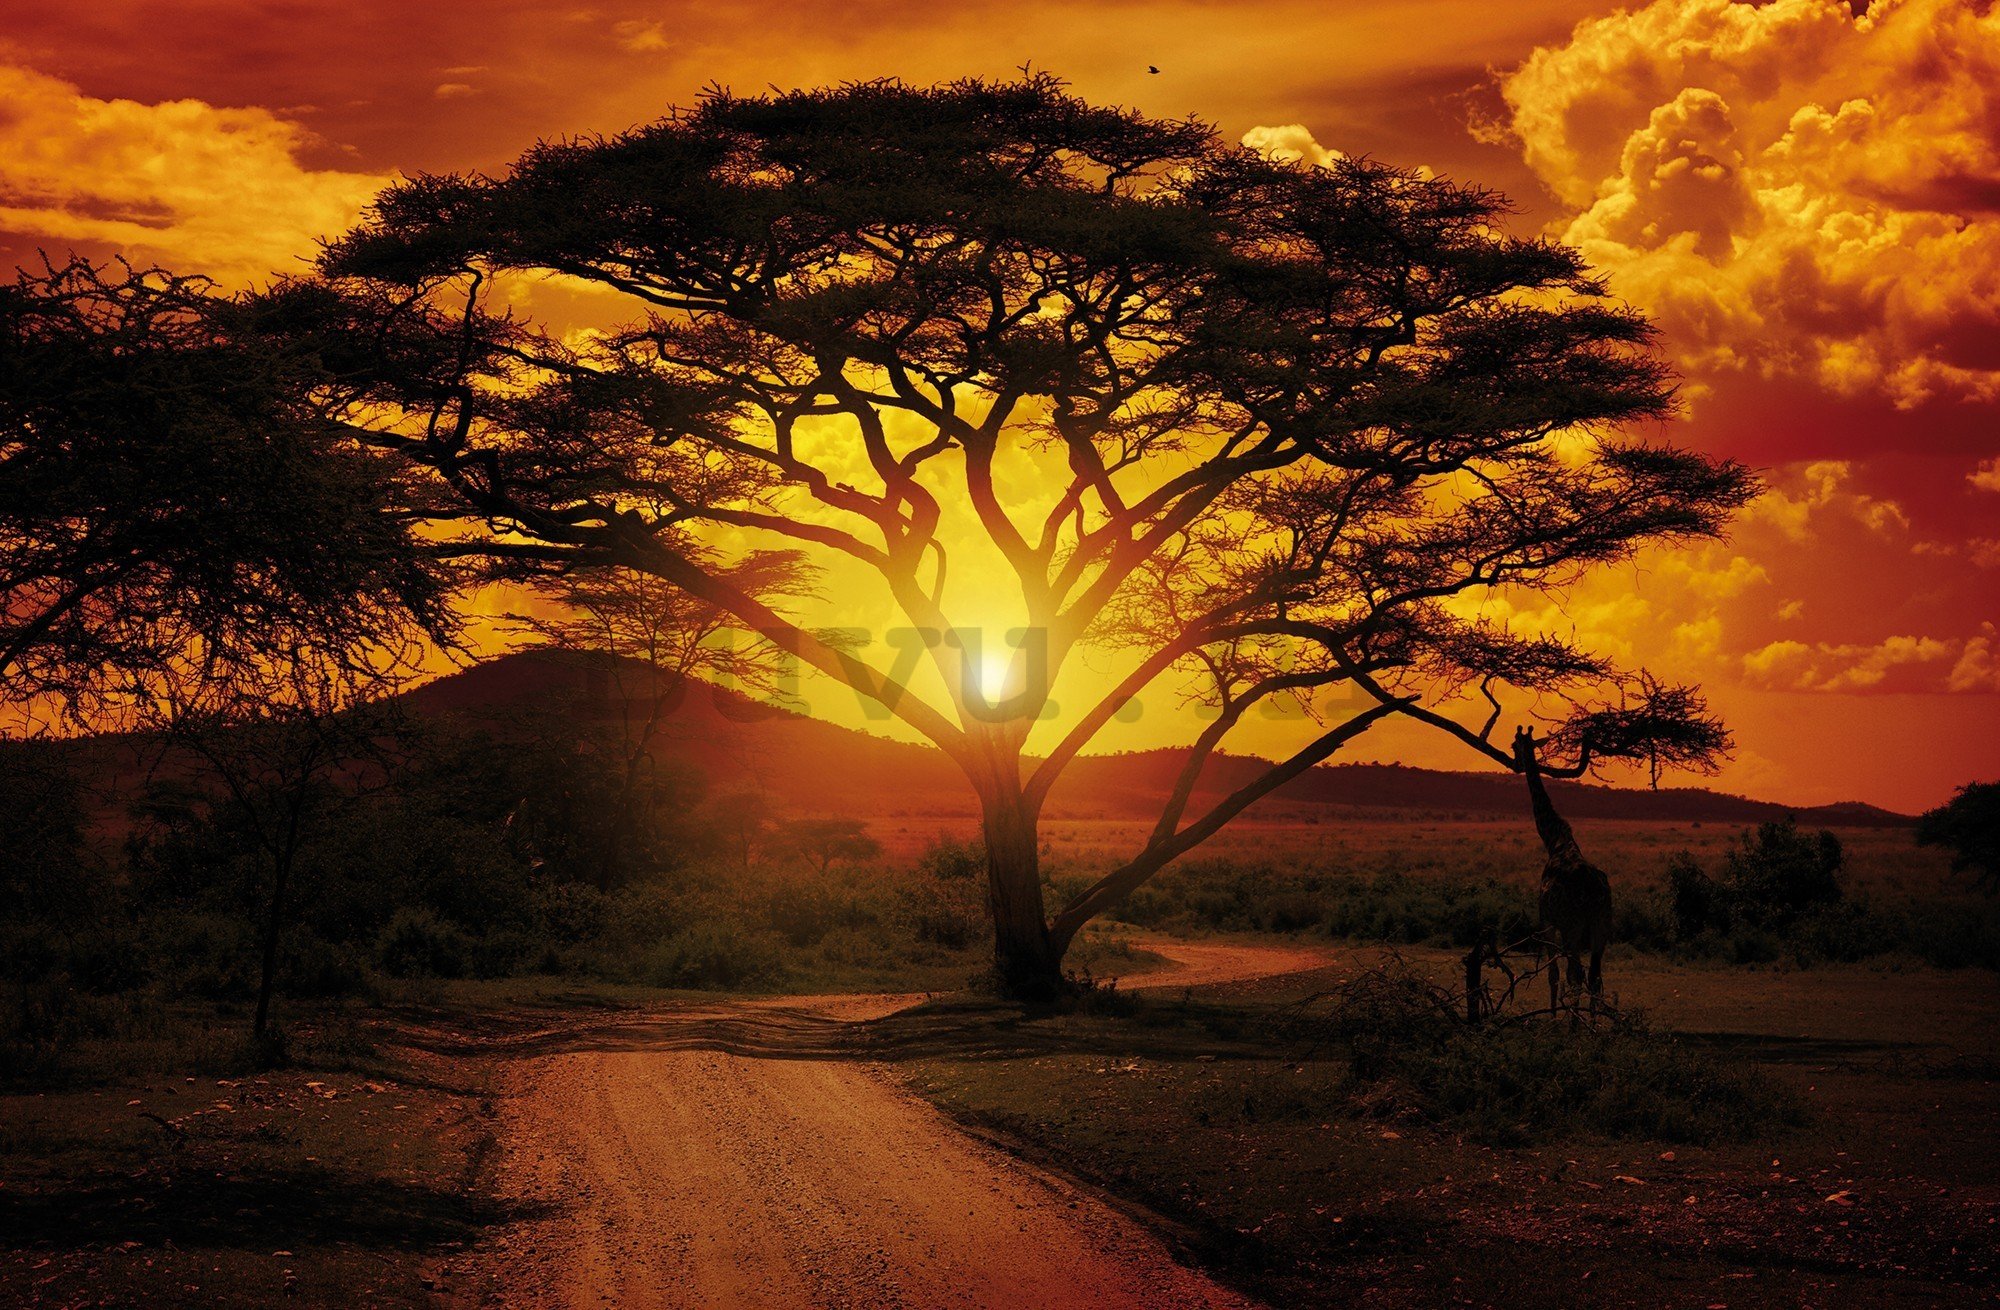 Vlies foto tapeta: Afrički zalazak sunca - 416x254 cm